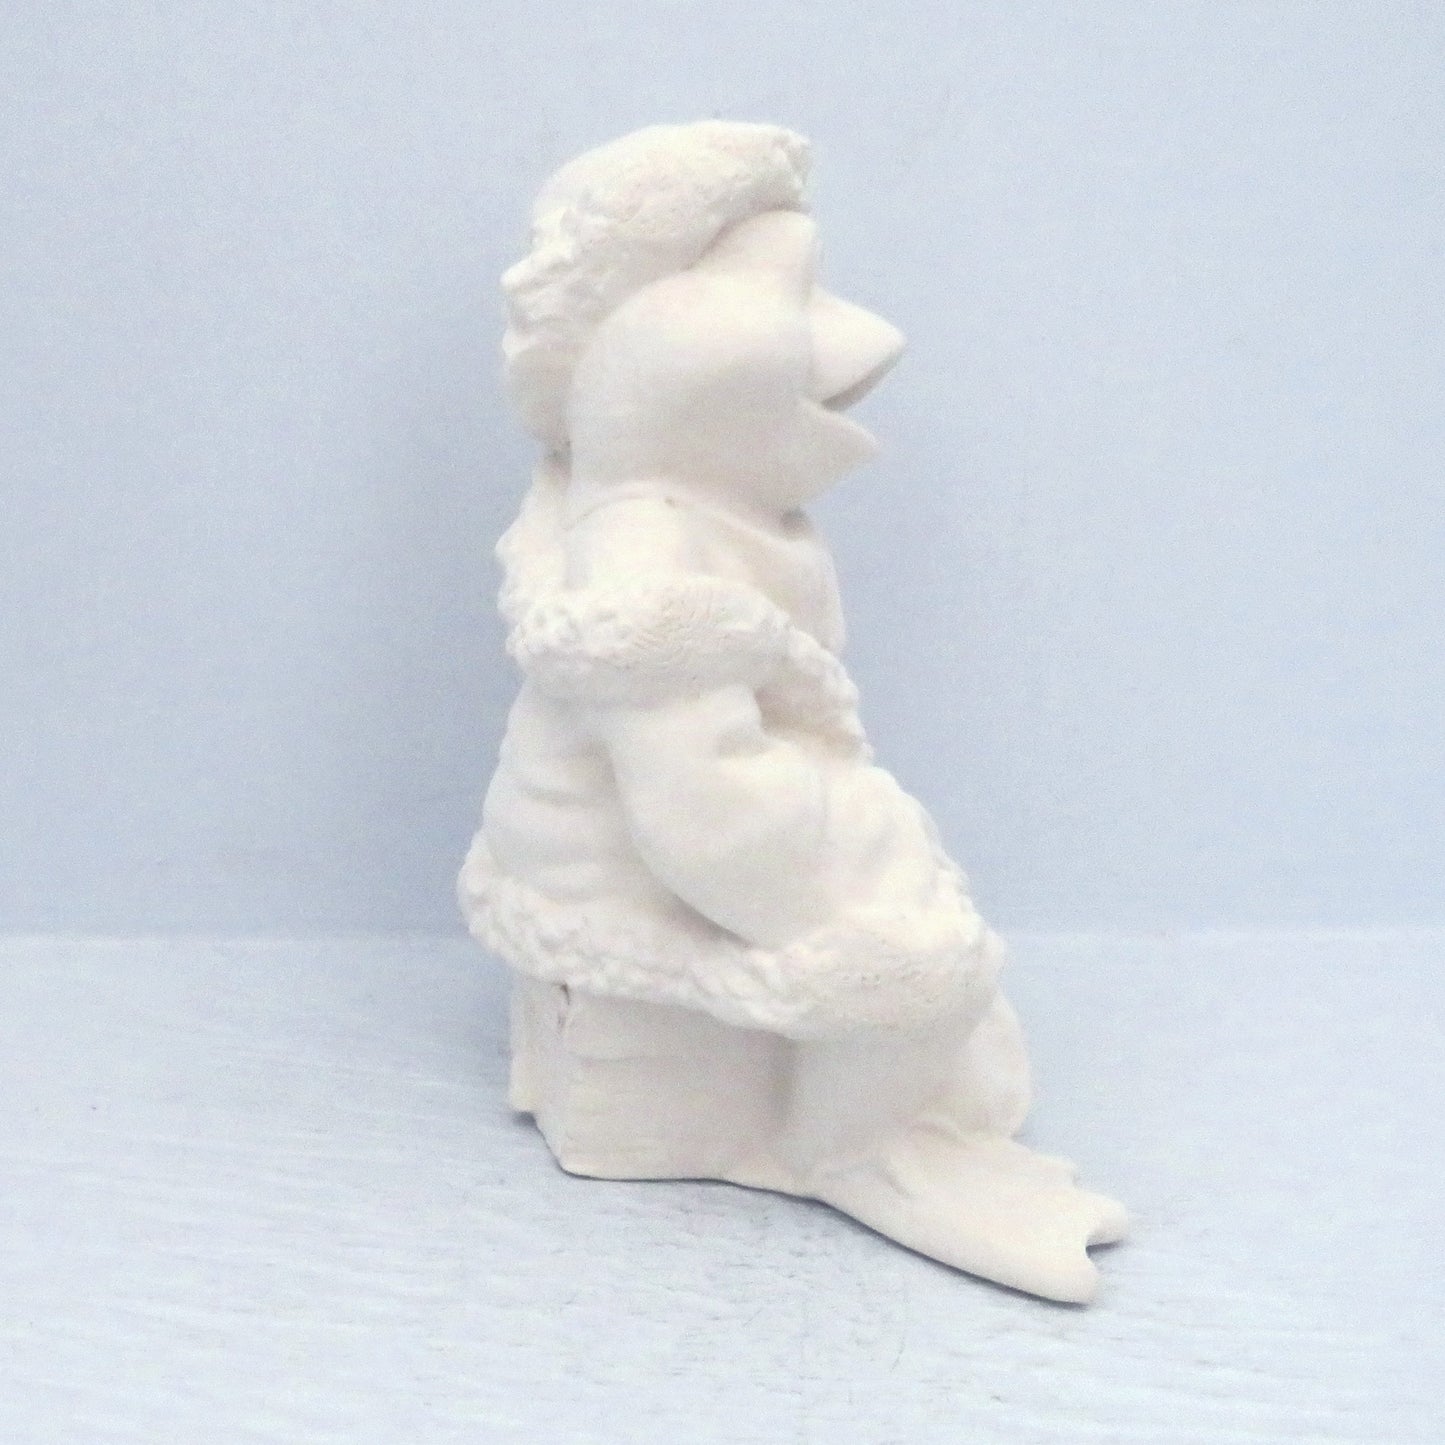 Handmade Ready to Paint Ceramic Santa Frog Figurine for Christmas Decoration